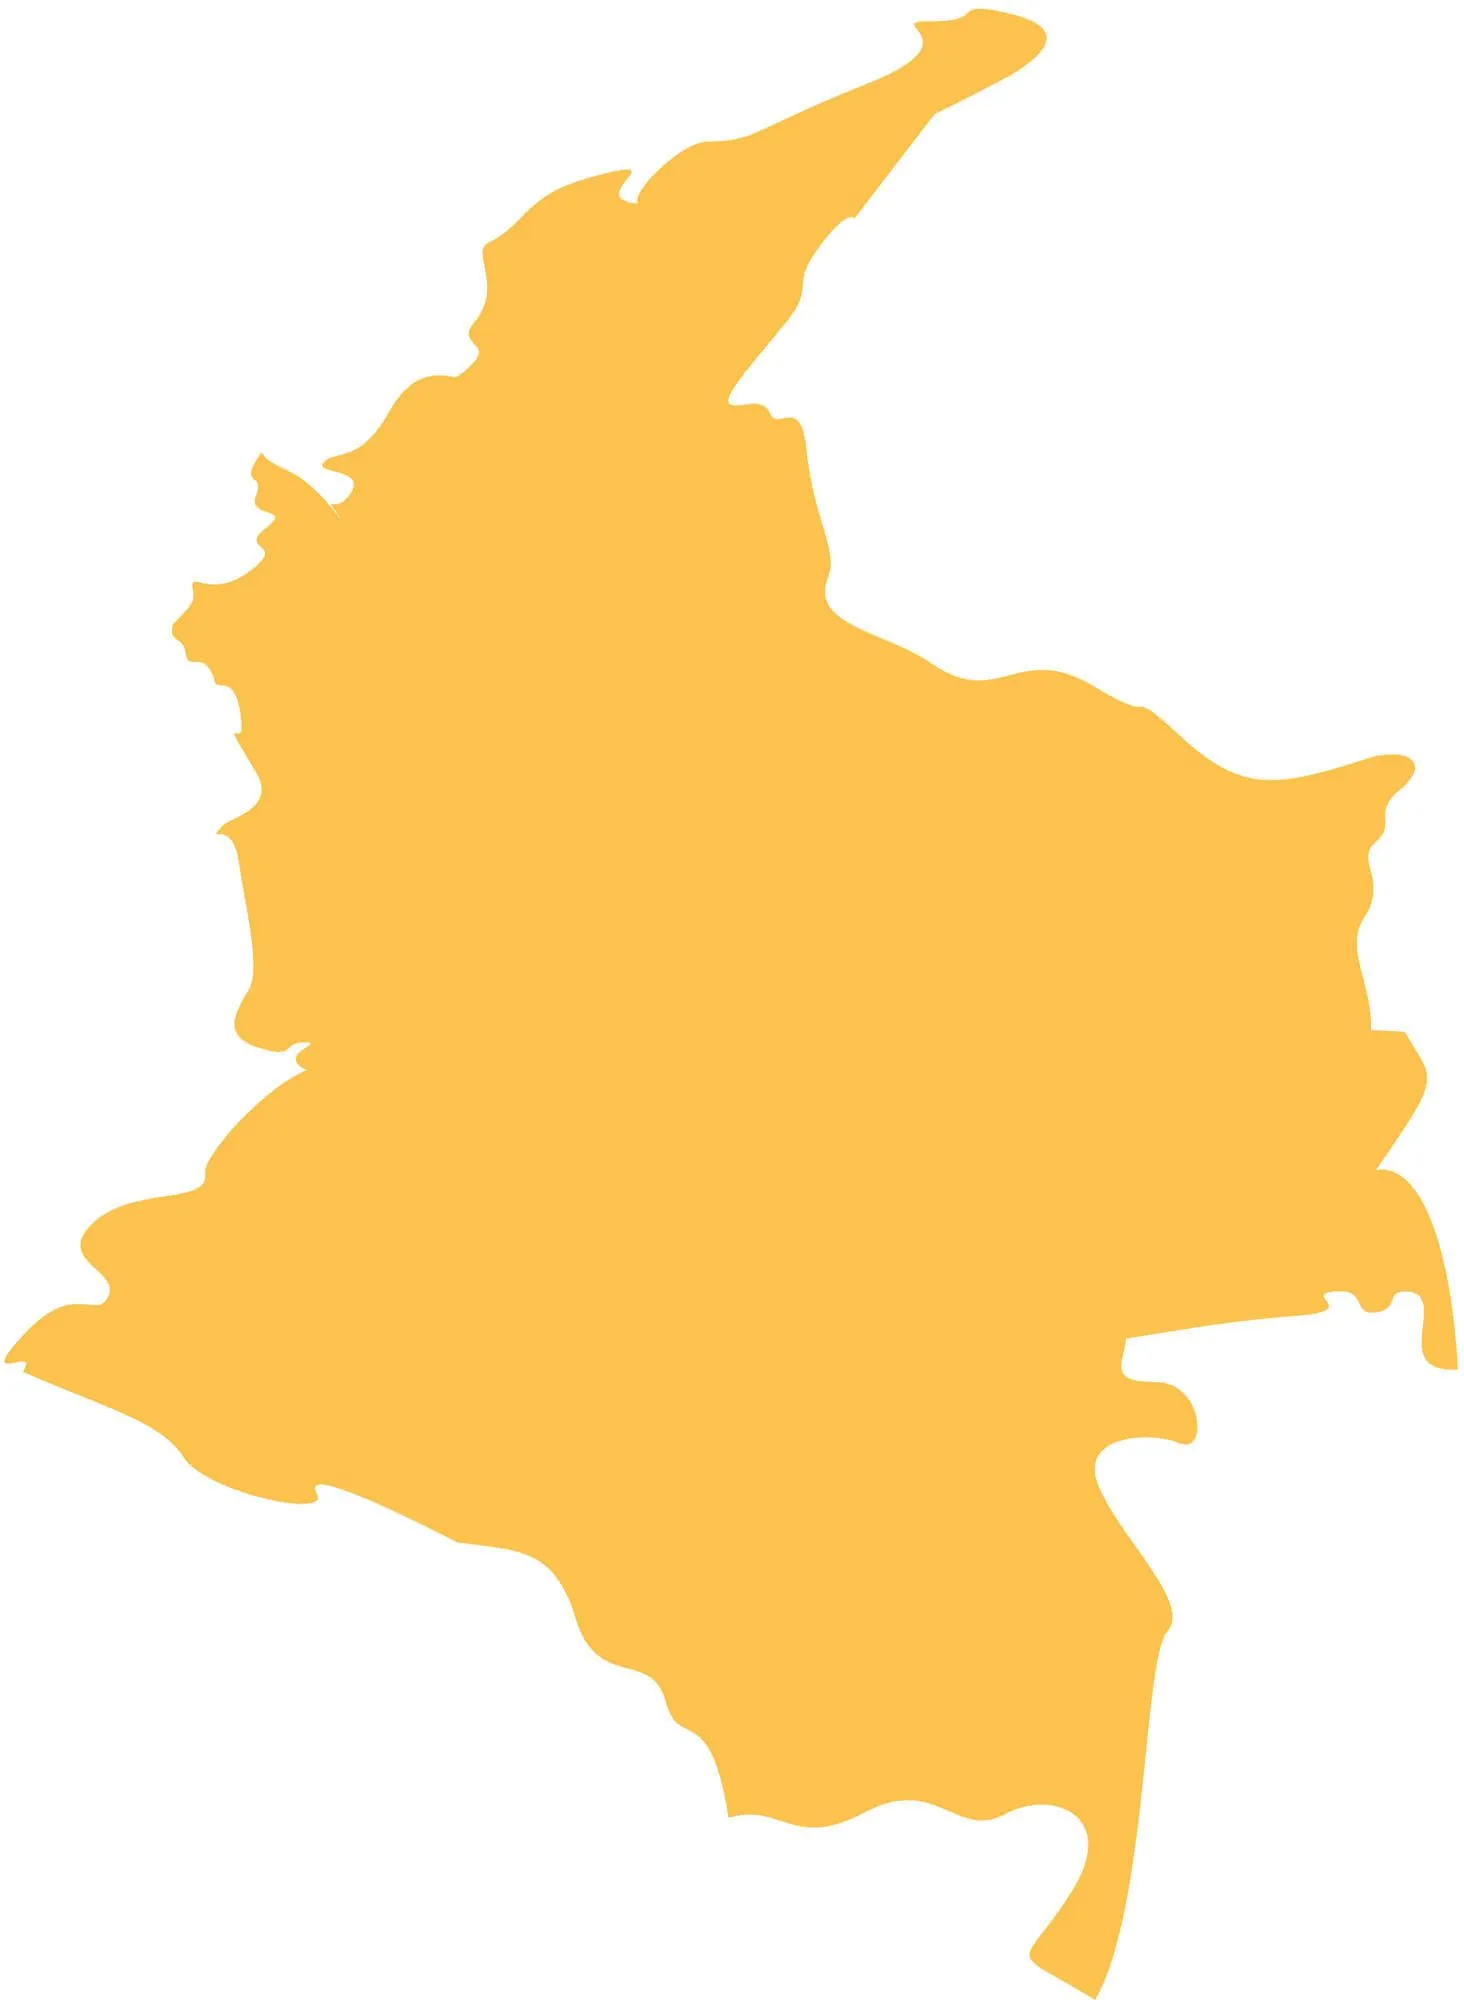 Pin Mapas De Colombia on Pinterest